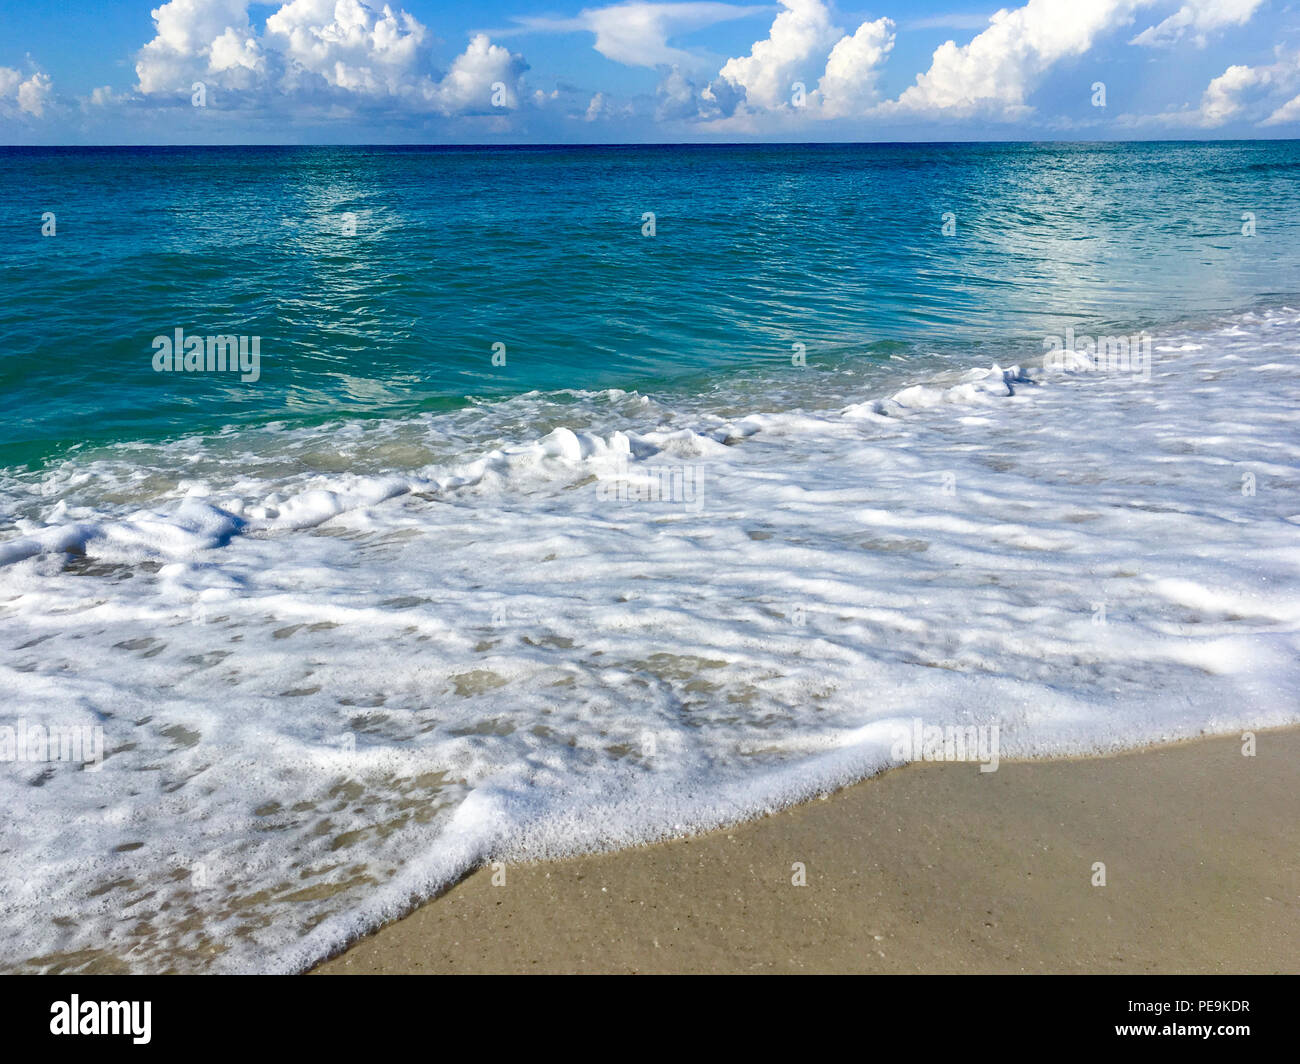 Gulf Shores Beach Surf ganz nah am Golf von Mexiko, guld Shores, Alabama, USA Stockfoto